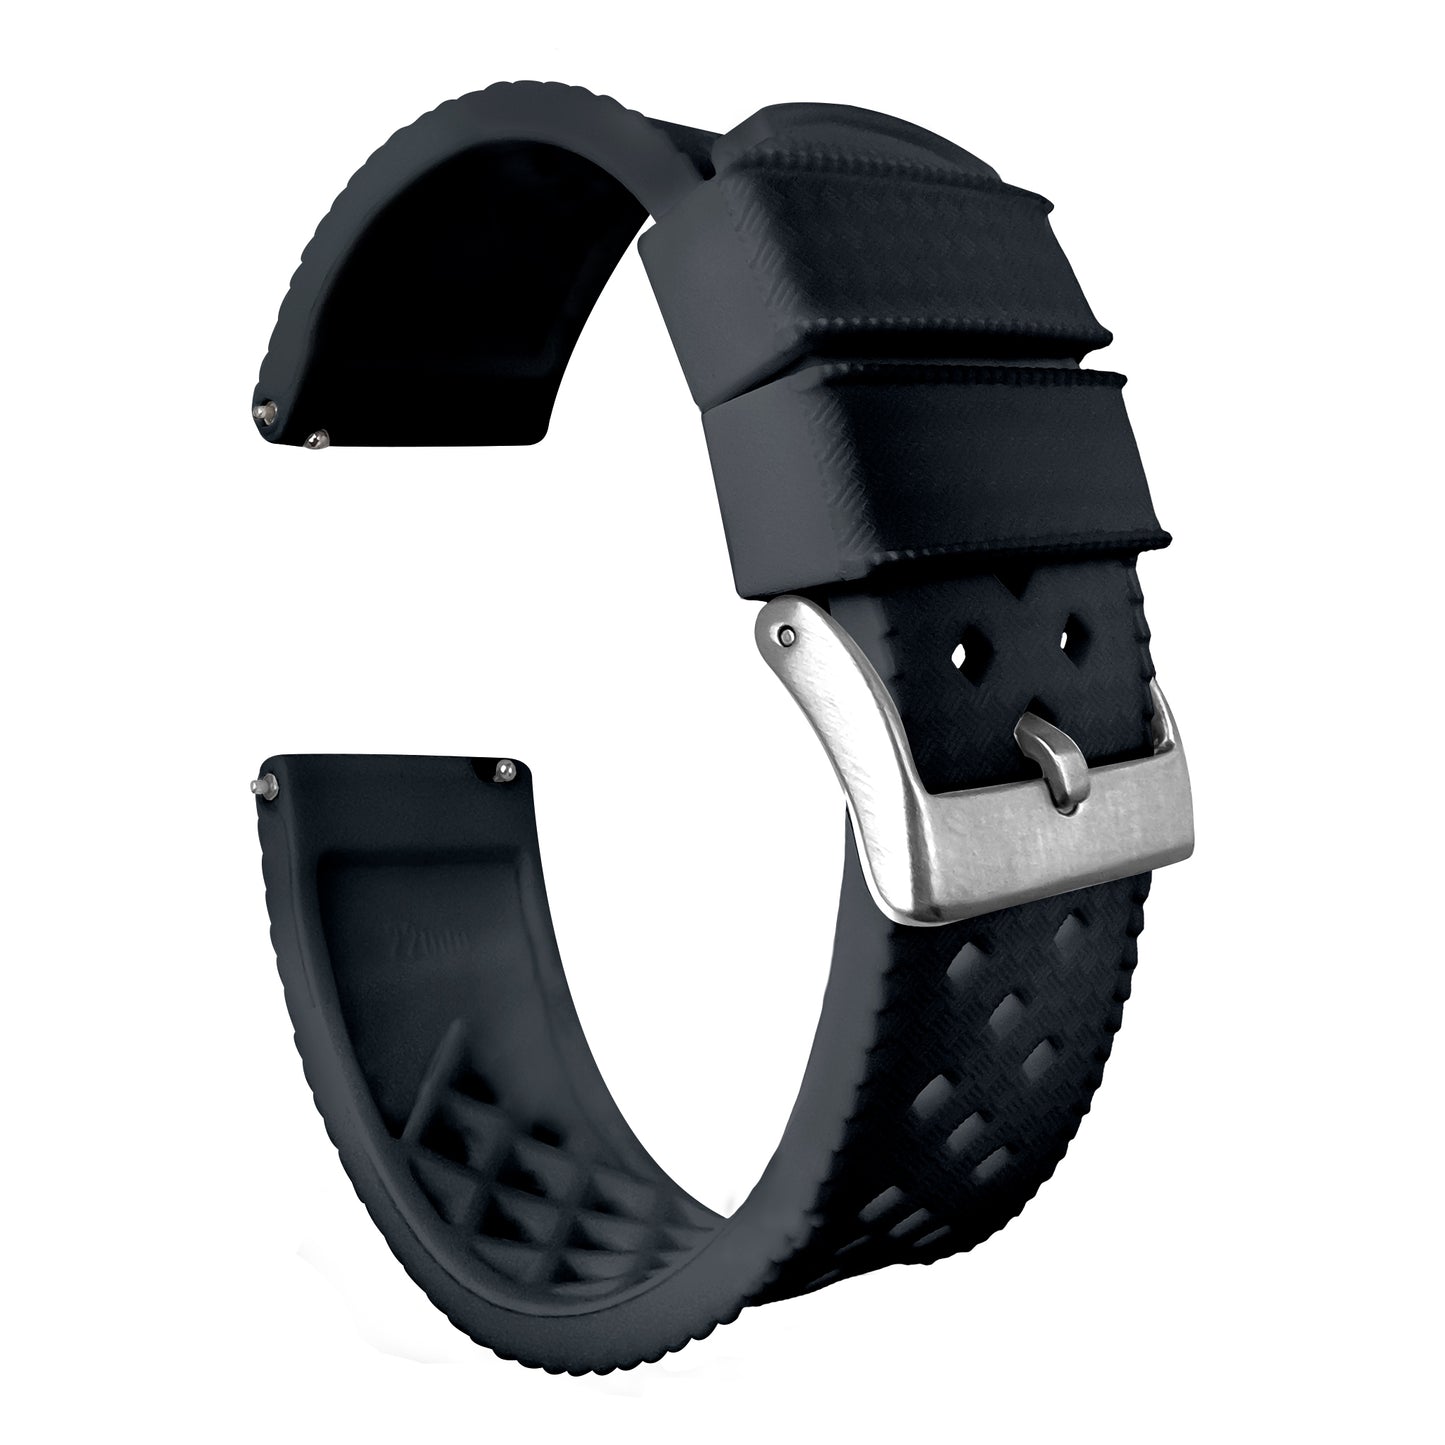 Samsung Galaxy Watch Tropical Style Black Watch Band